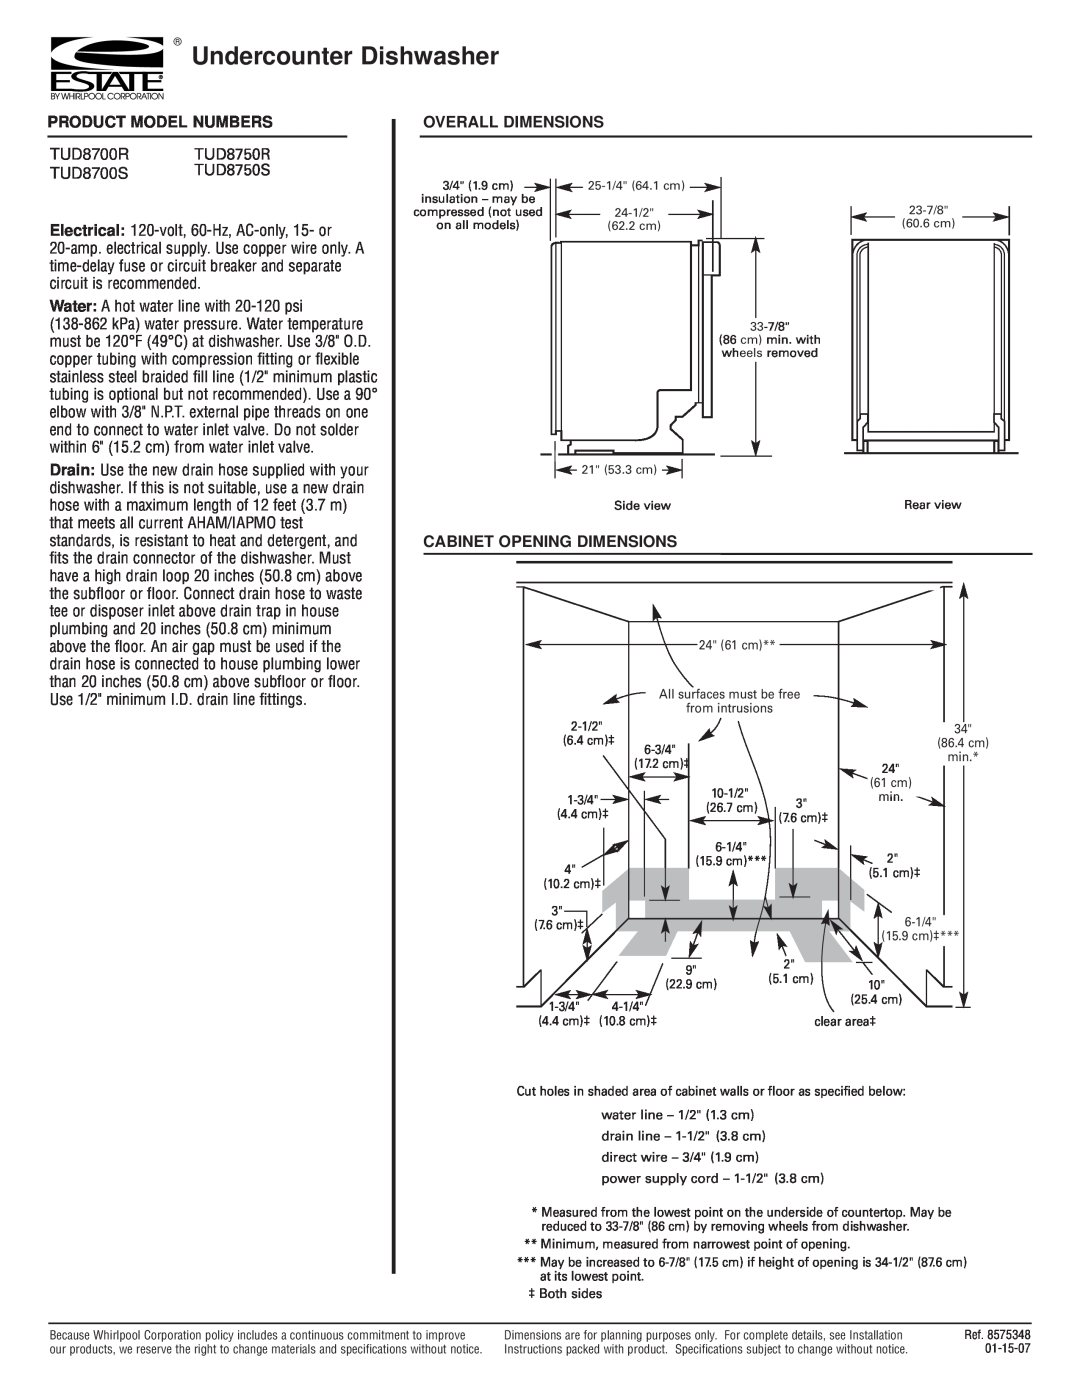 Estate dimensions Undercounter Dishwasher, Product Model Numbers, TUD8700R TUD8750R TUD8700S TUD8750S 